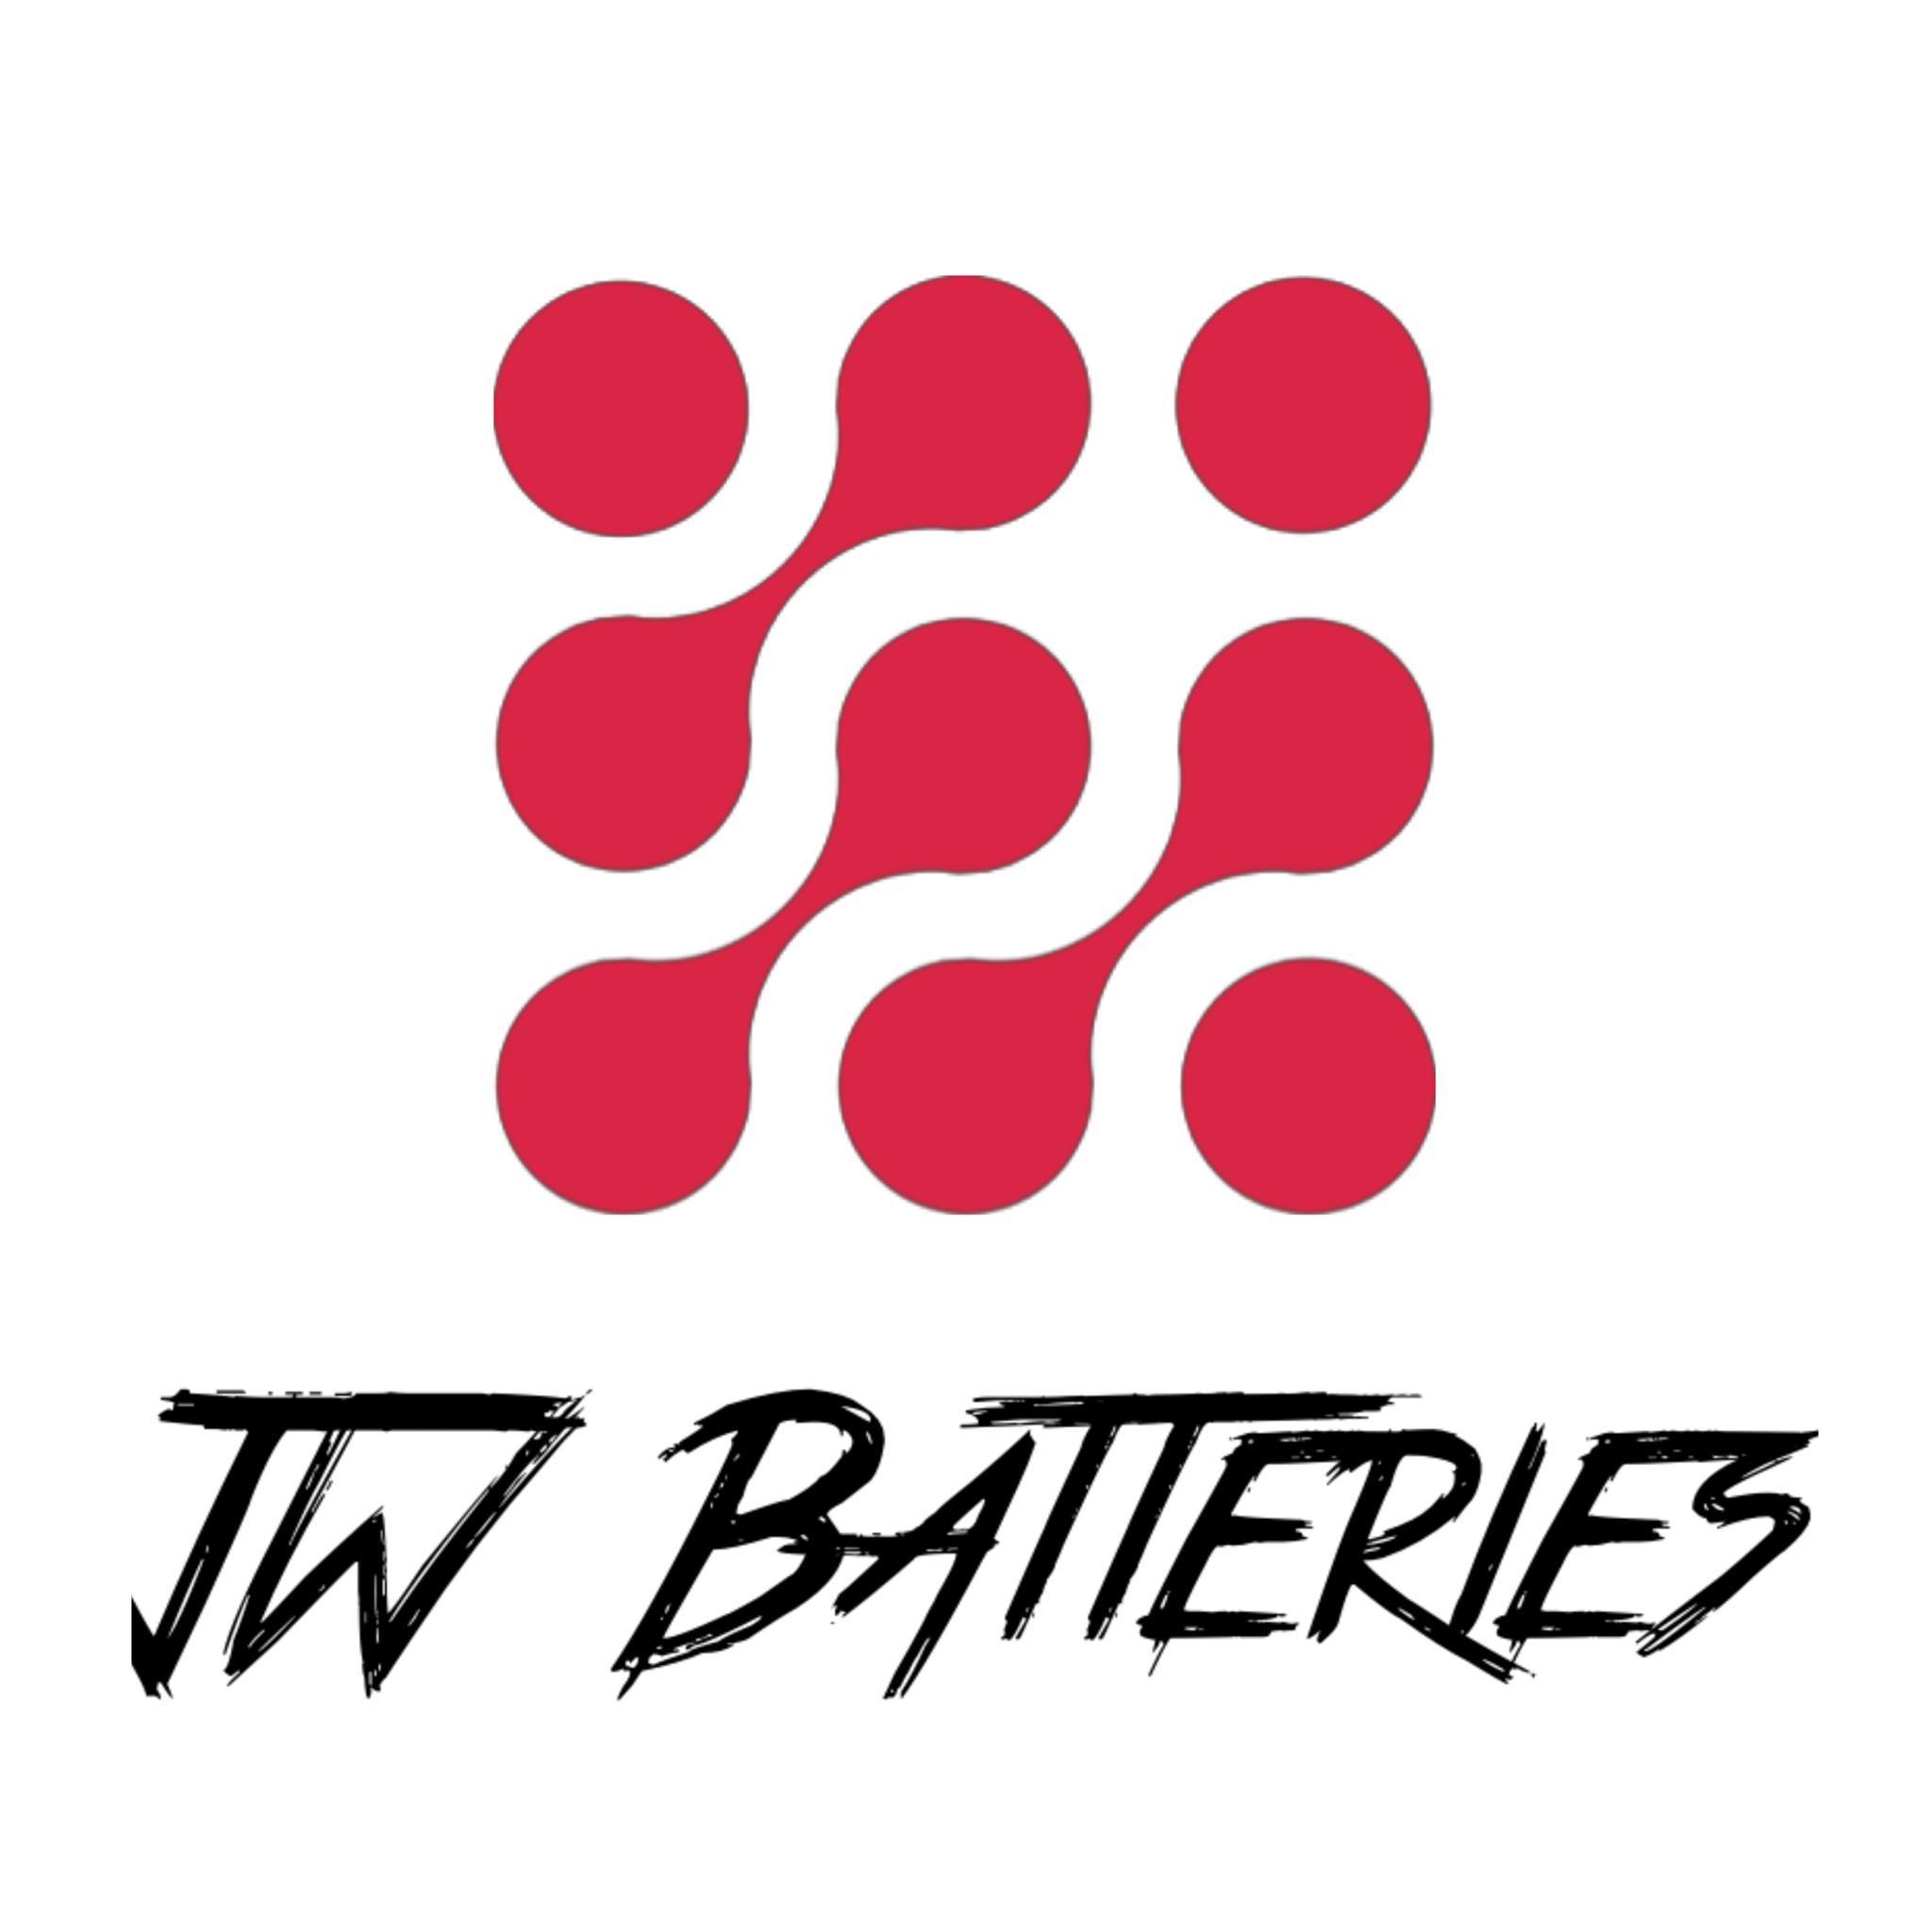 JW Batteries